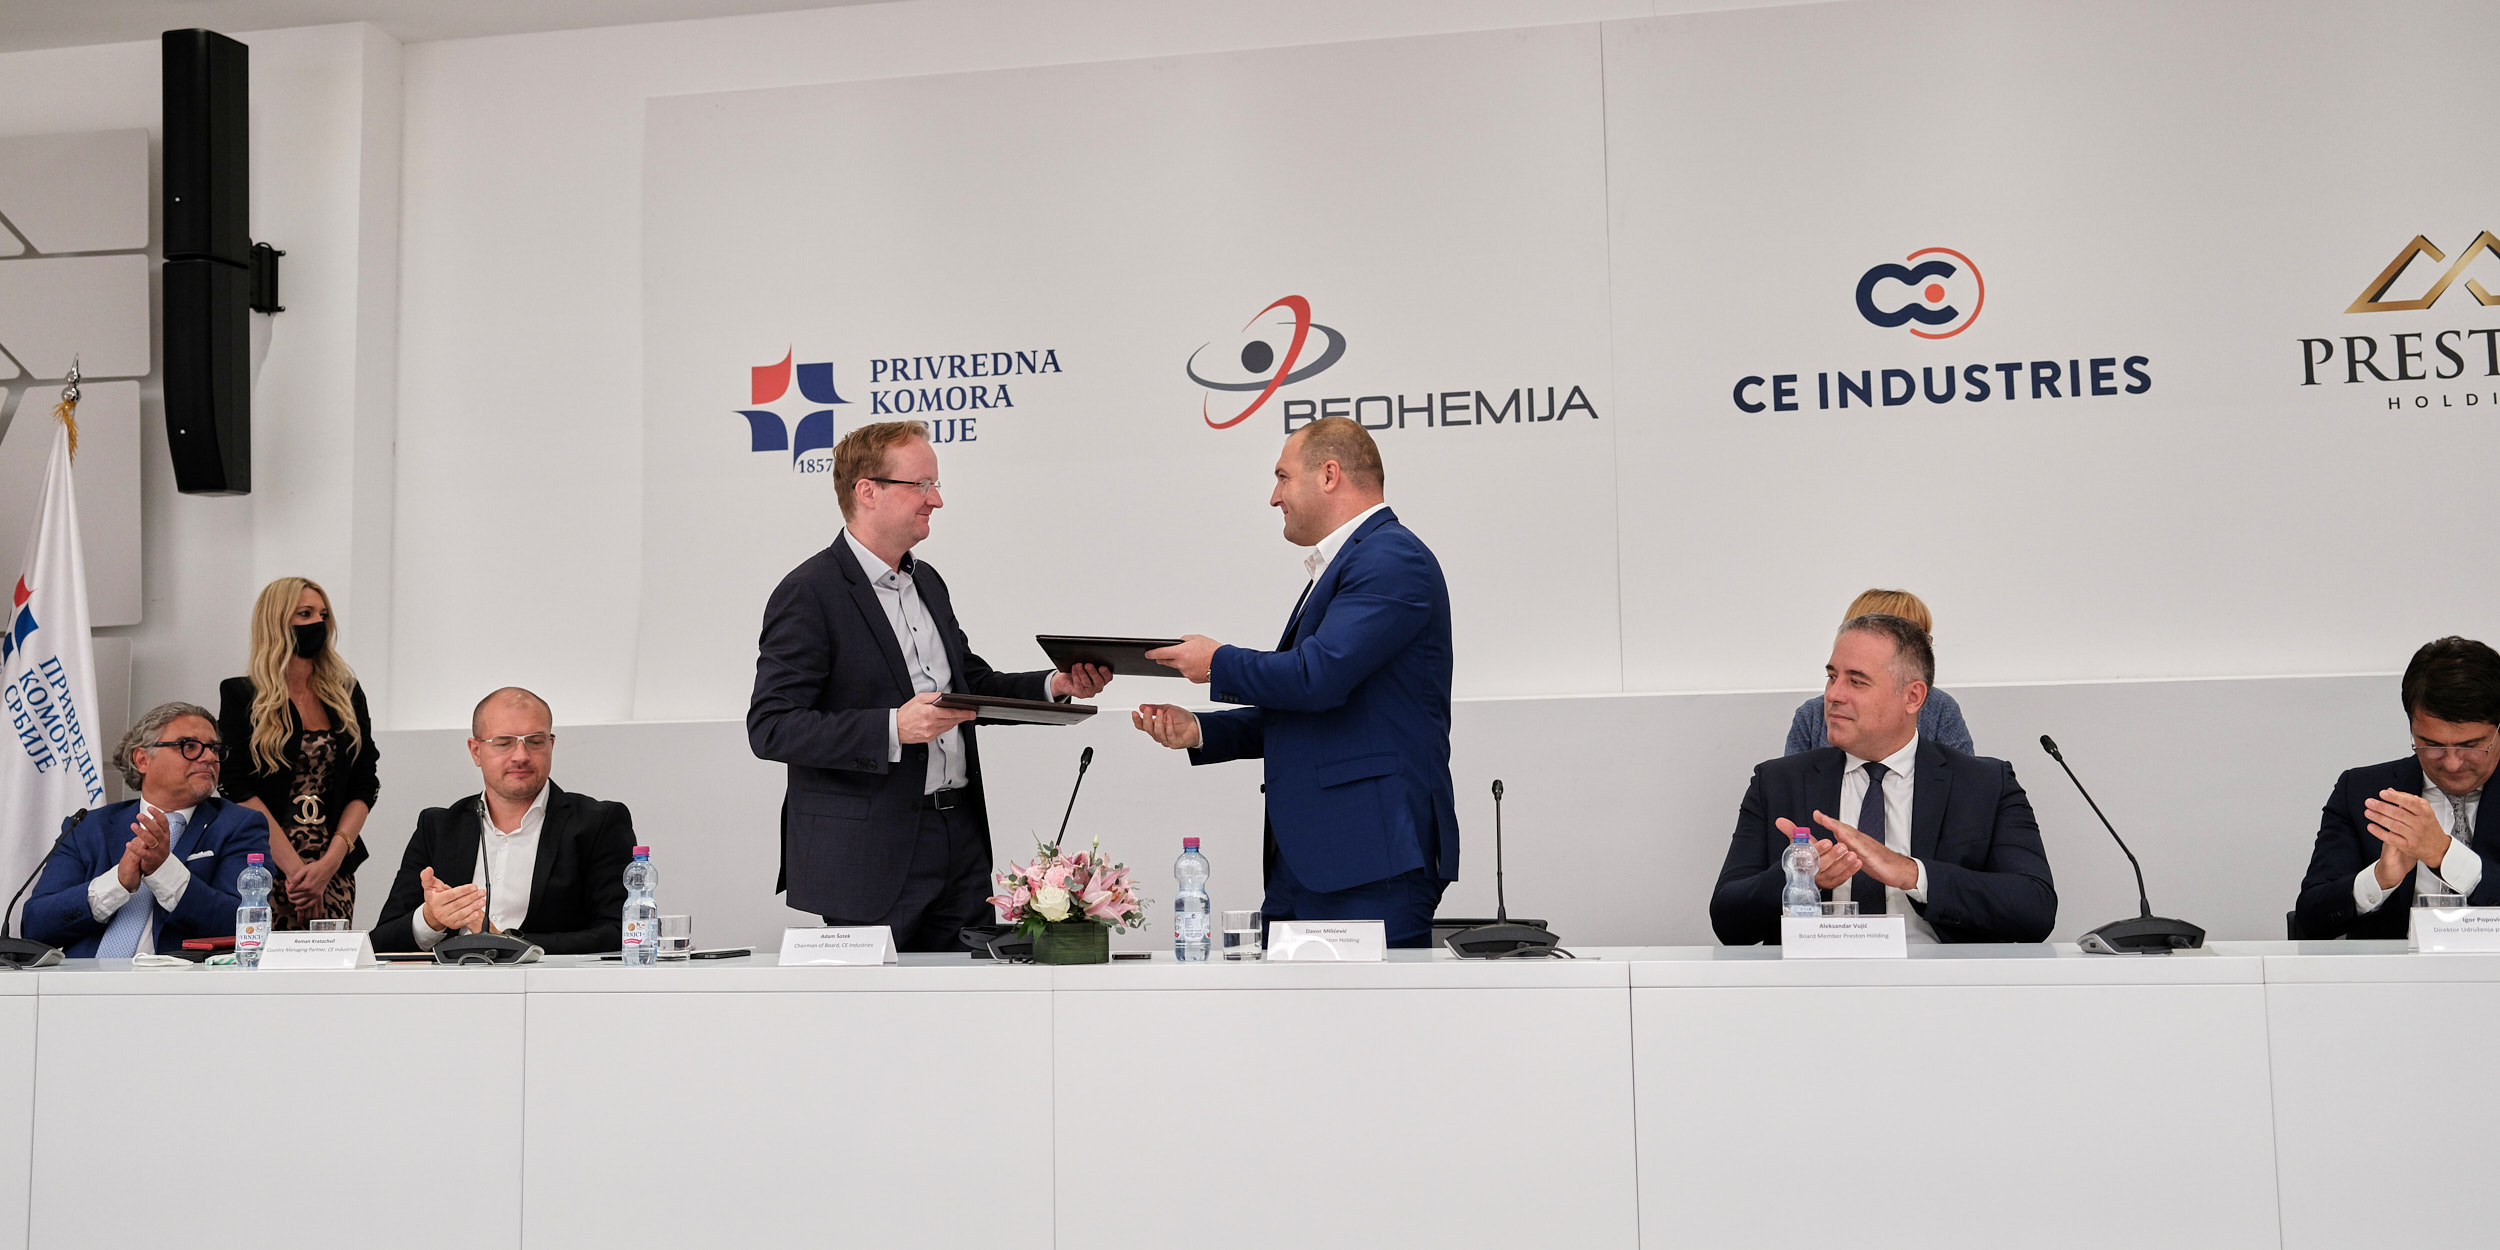 CE Industries buys Serbian detergent manufacturer Beohemija